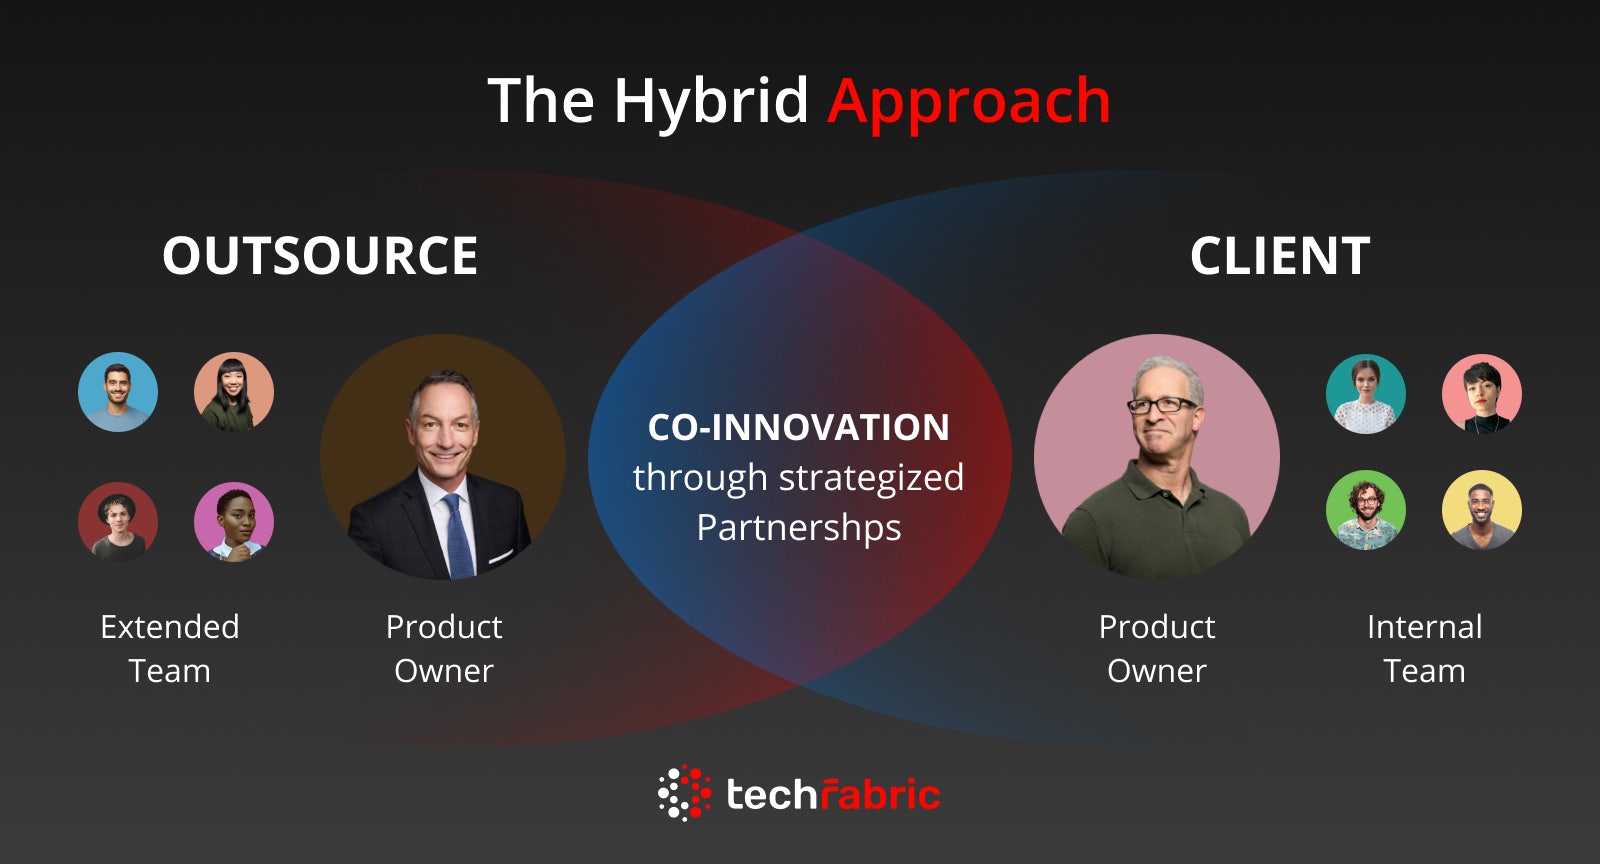 TechFabric's hybrid approach.